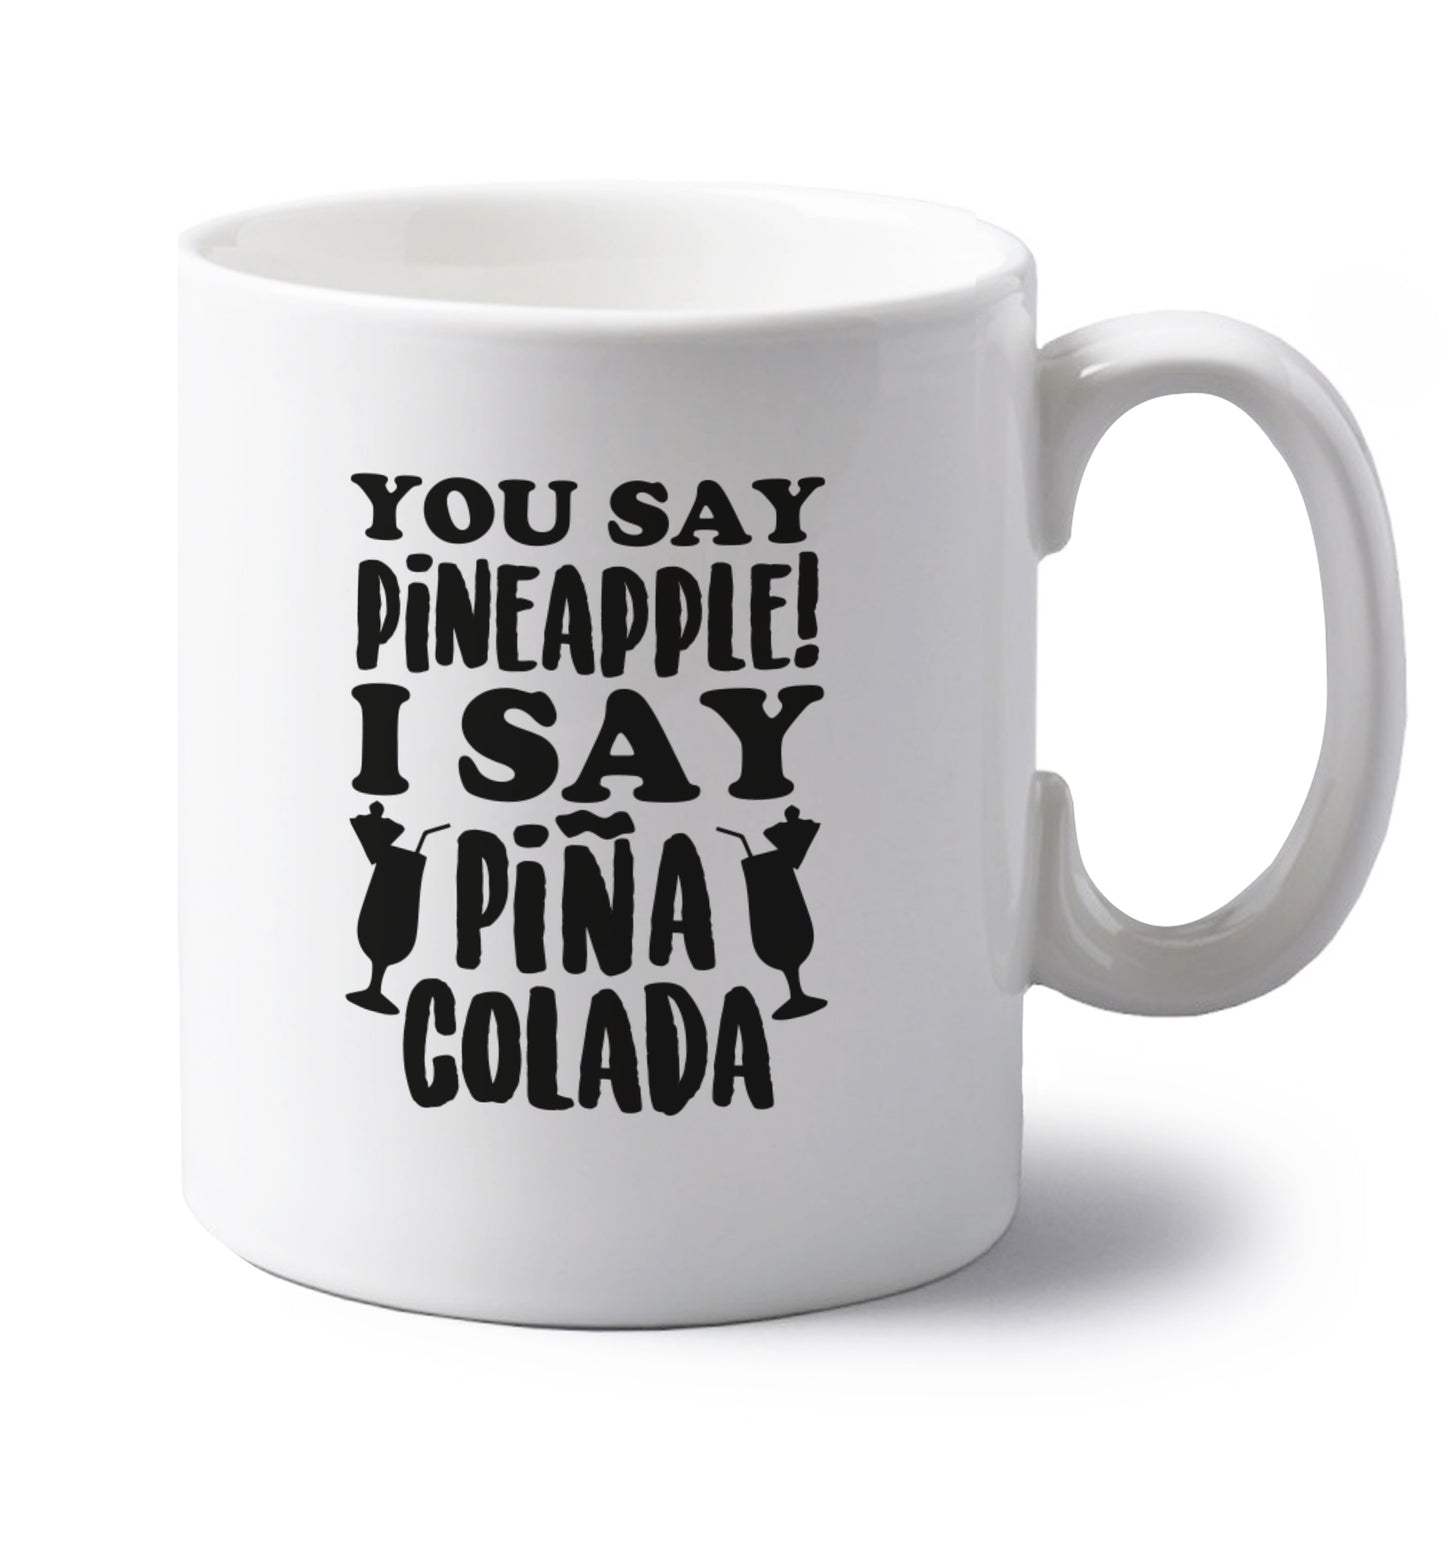 You say pinapple I say Pina colada left handed white ceramic mug 